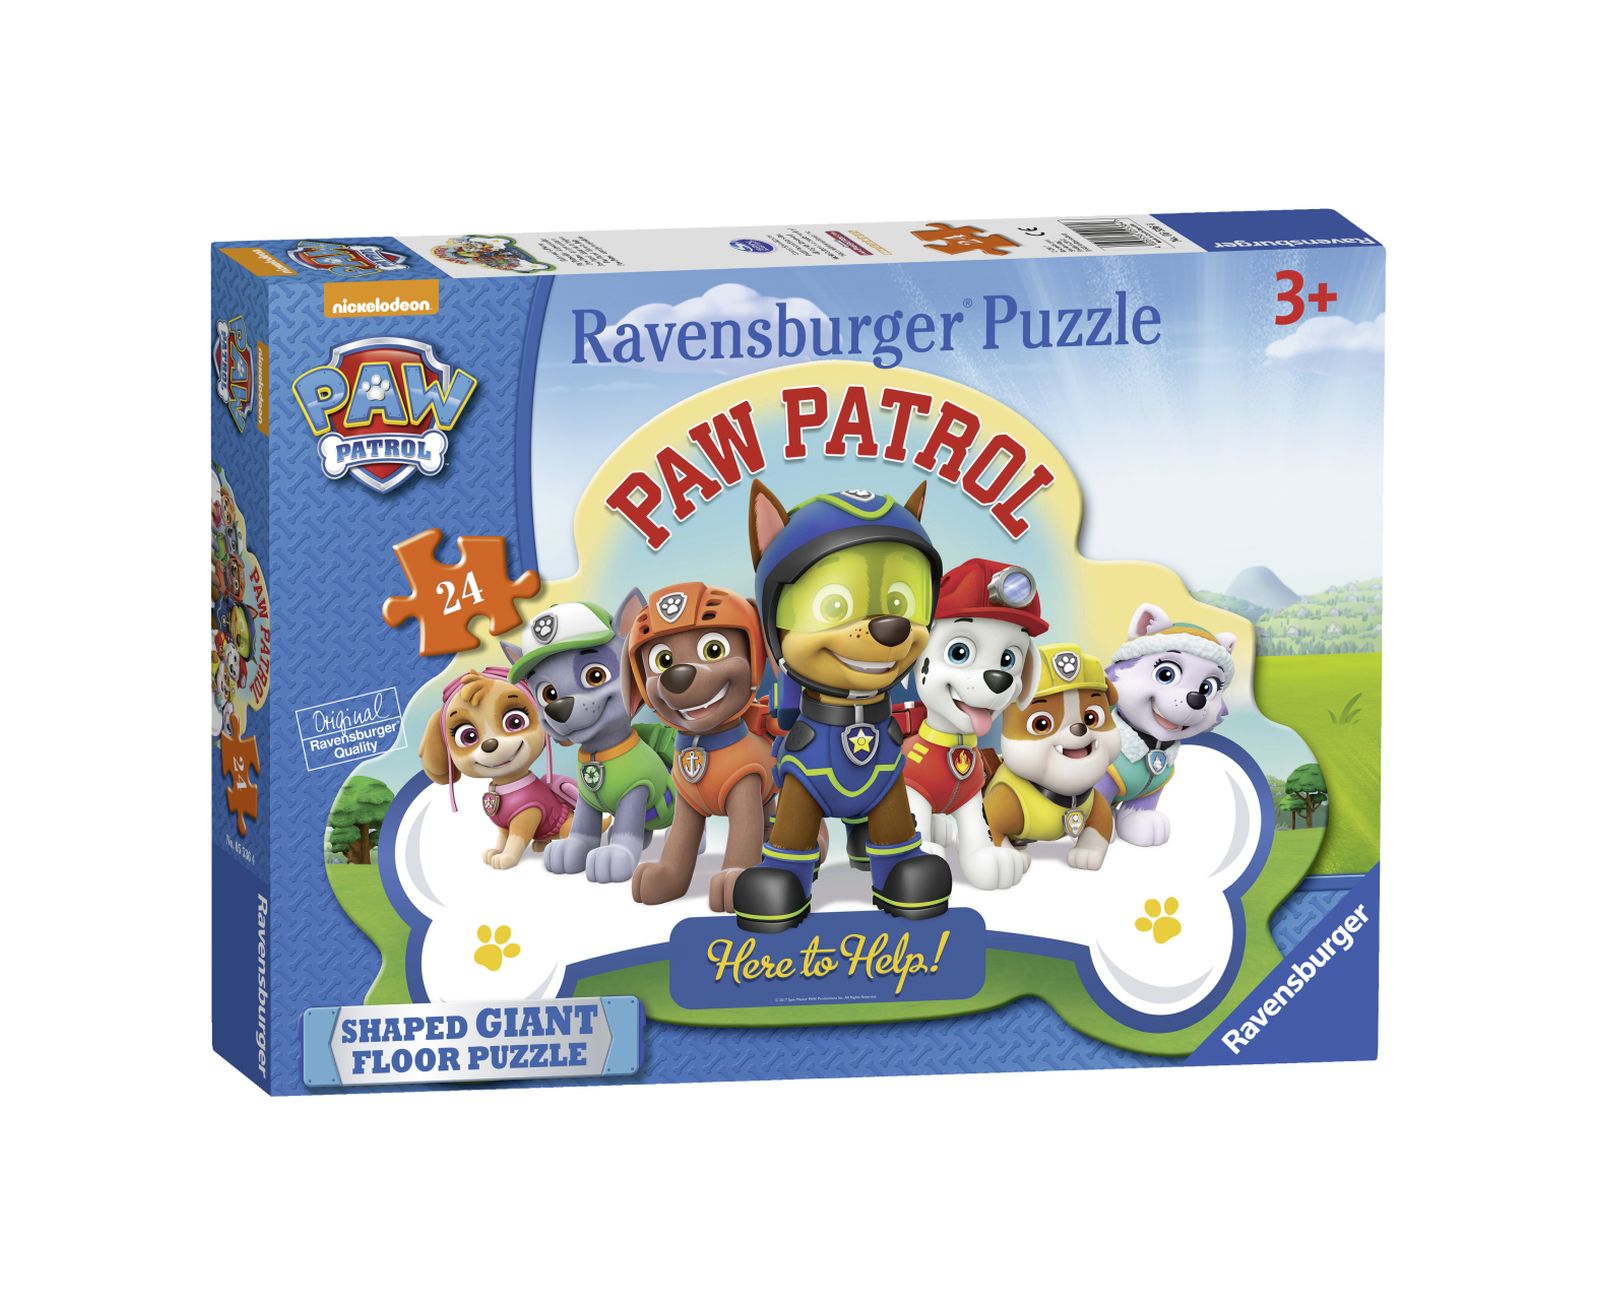 Ravensburger puzzle 24 giant pavimento - paw patrol - RAVENSBURGER, Paw Patrol